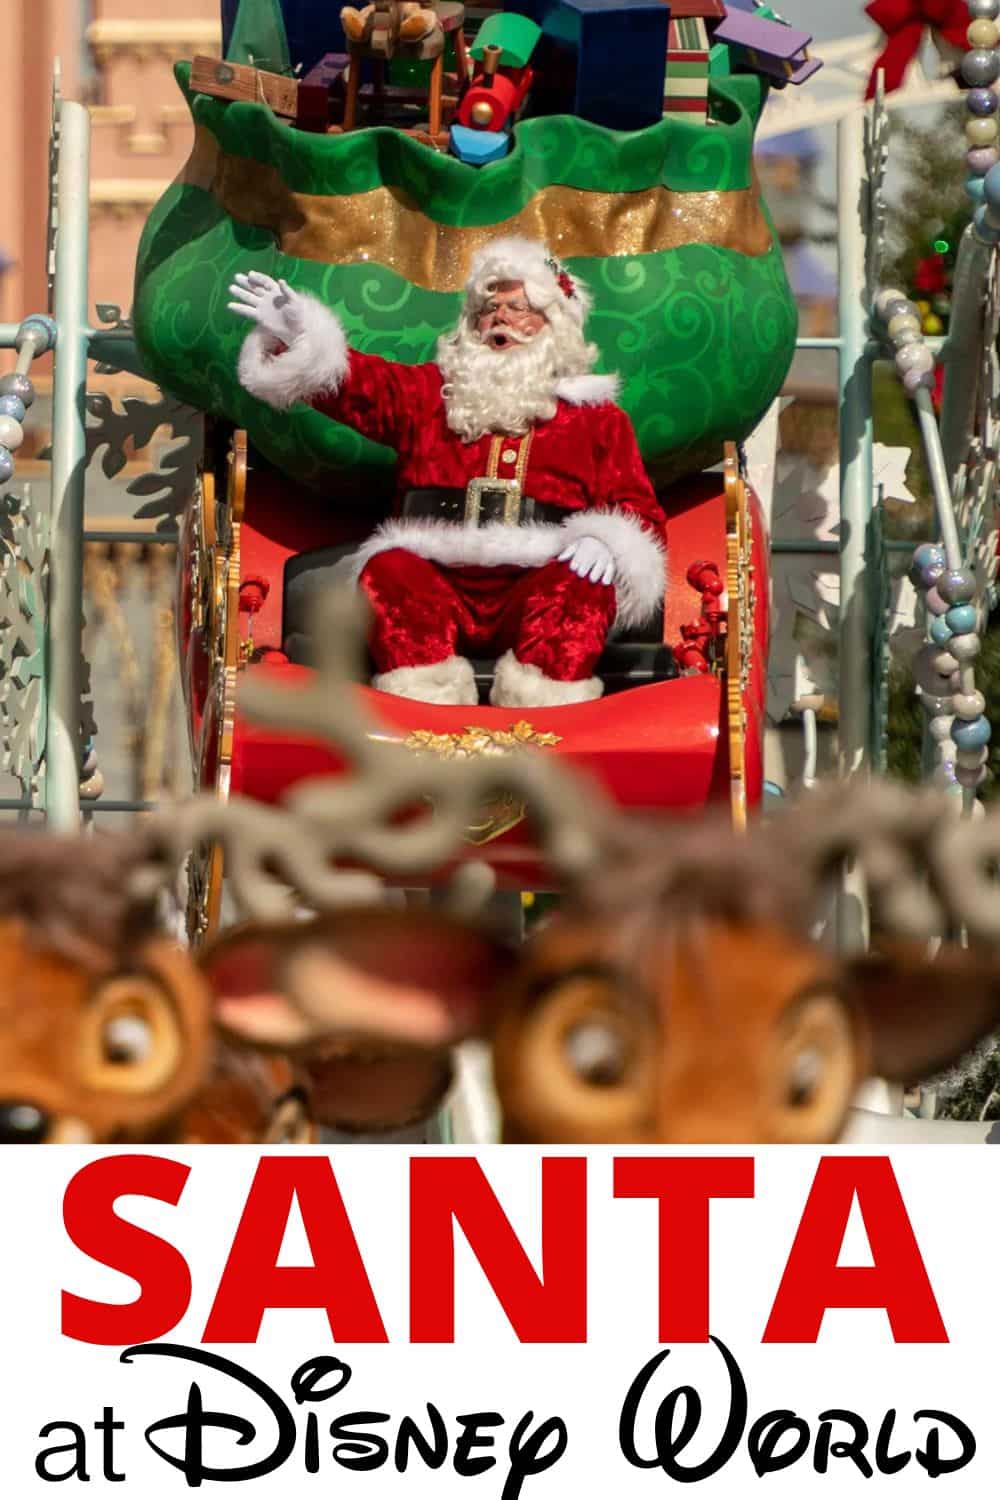 Where to Find Santa at Disney World